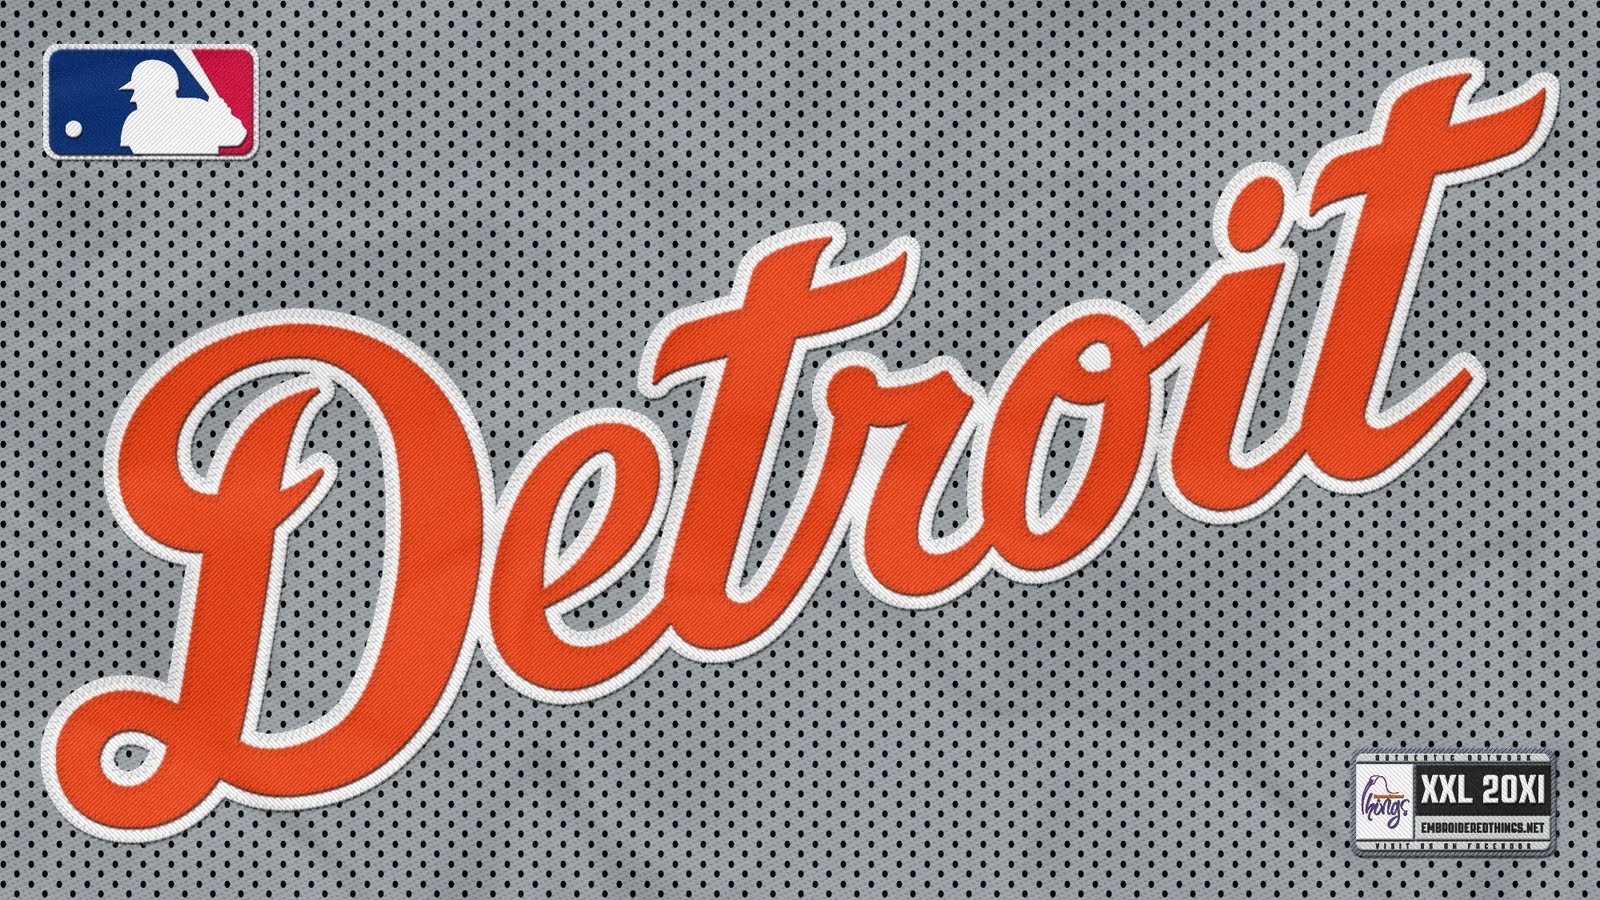 Detroit Lions Hd Wallpaper Free Download Wallpaper DaWallpaperz